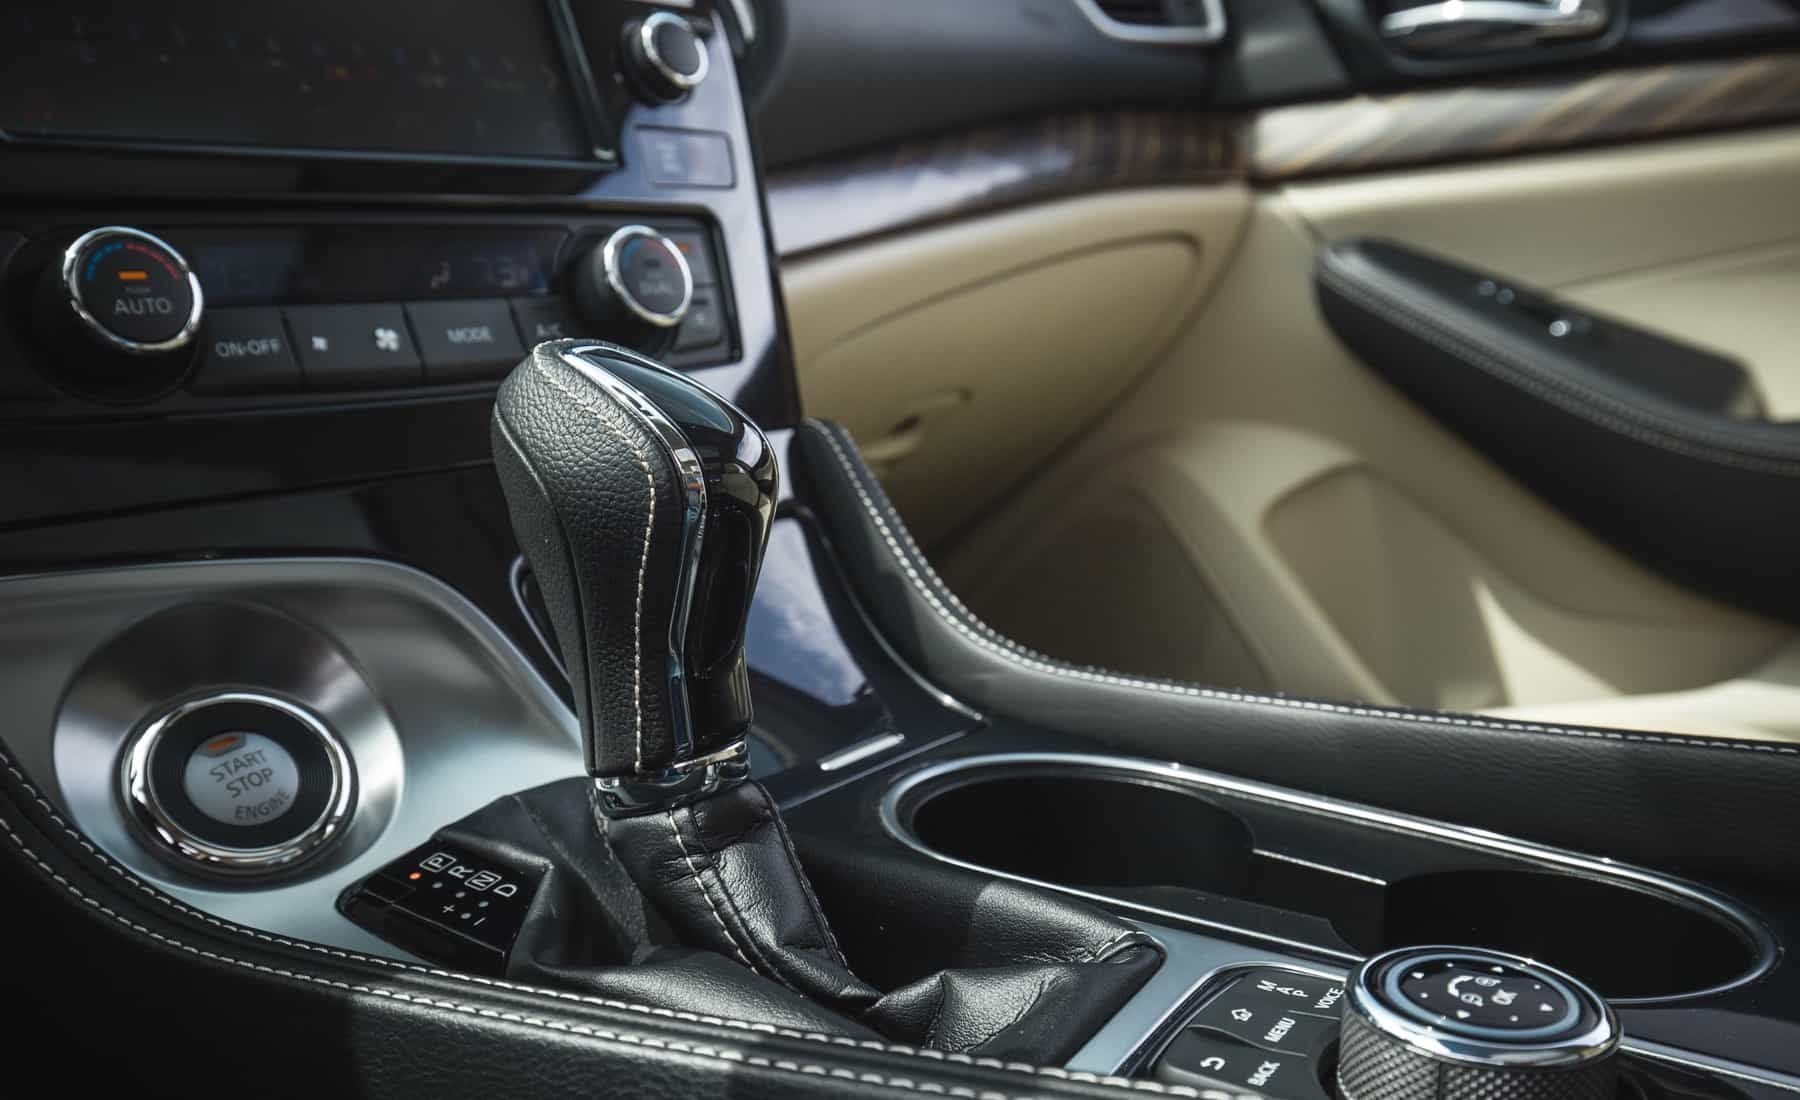 2017 Nissan Maxima Interior View Gear Shift Knob (View 12 of 40)